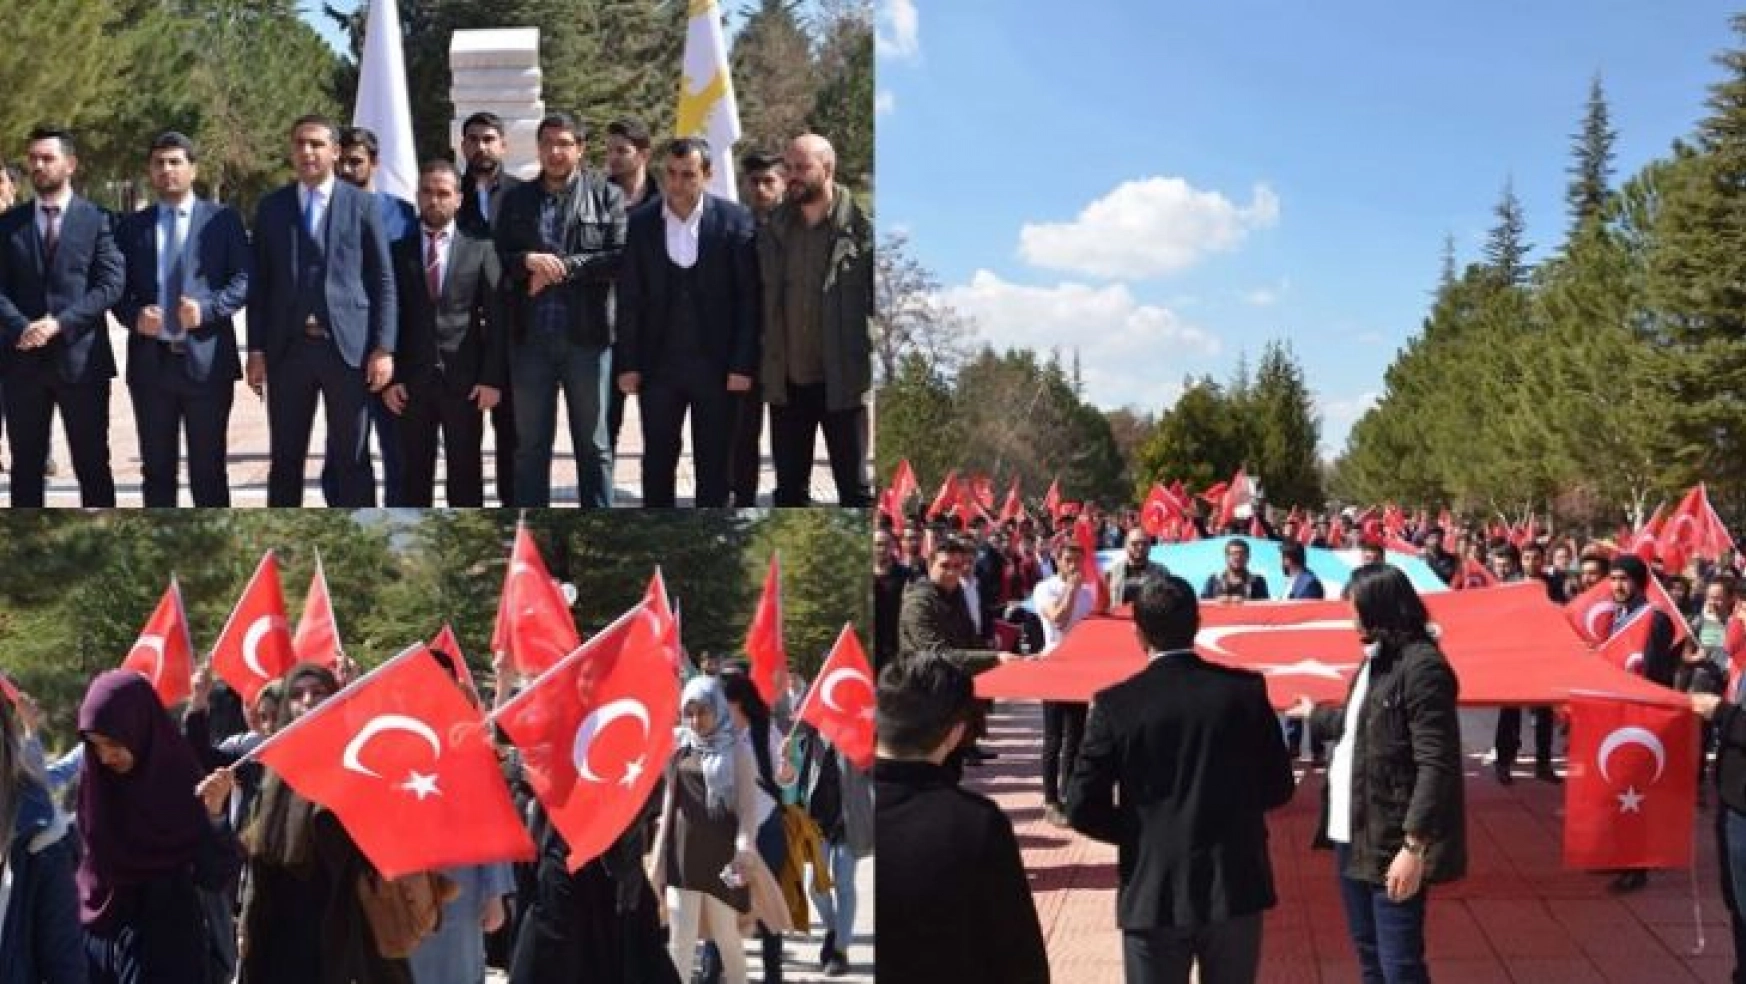 Malatya Ülkü Ocakları'ndan 'İstiklal Marşı' Yürüyüşü